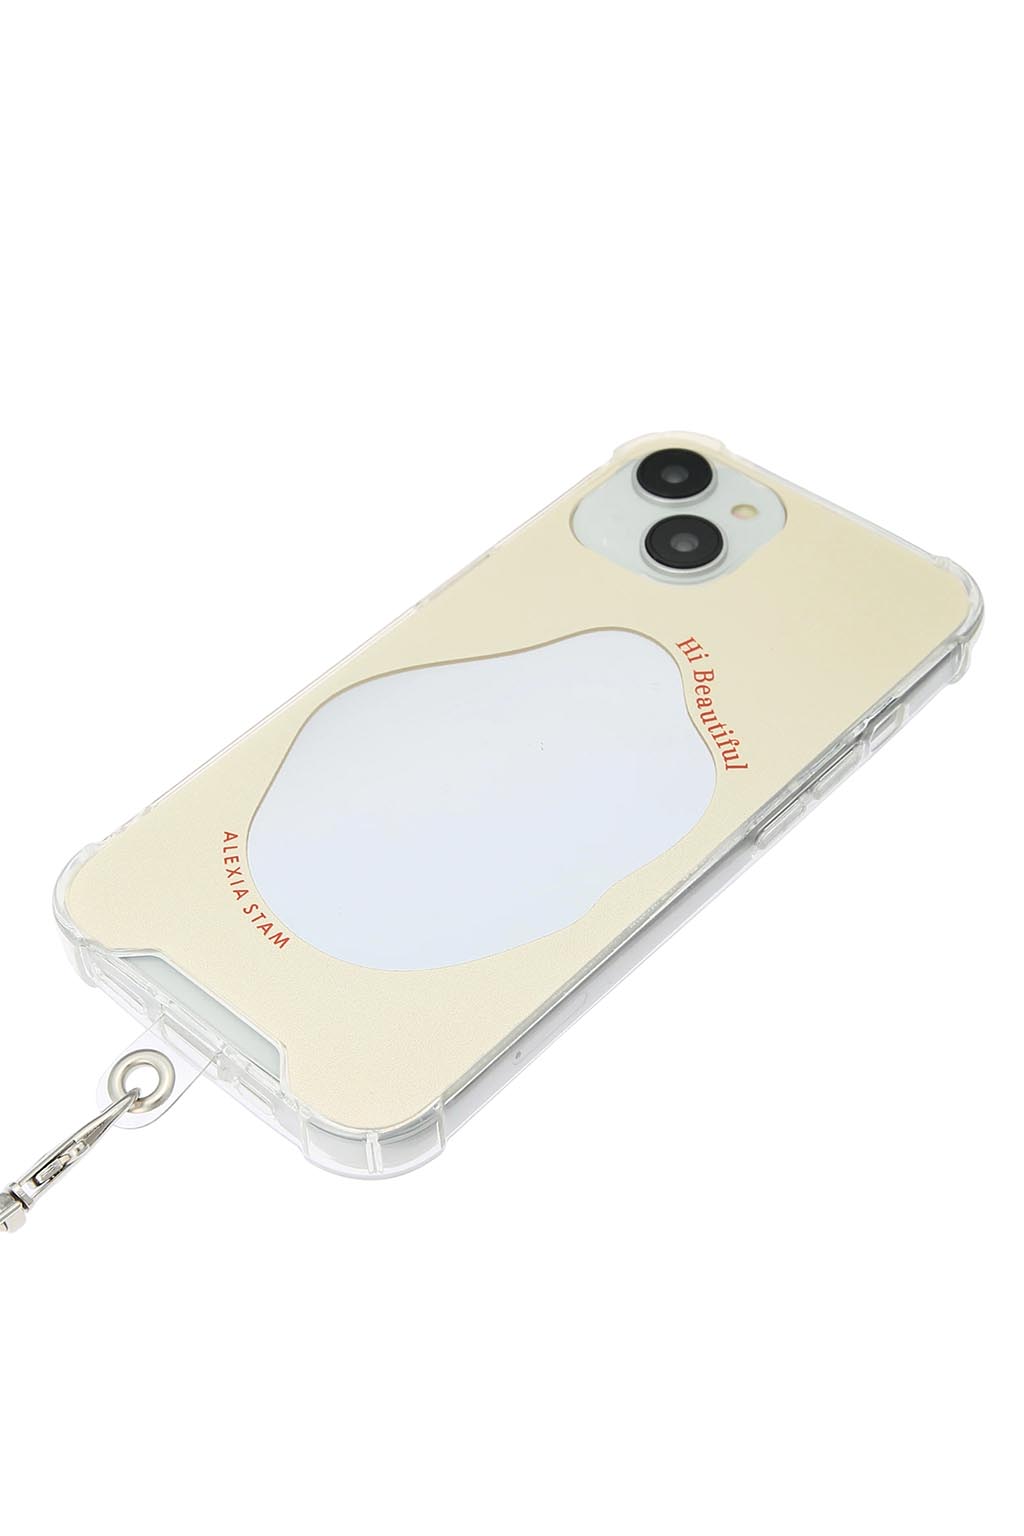 Mirror iPhone Case With Strap - ALEXIA STAM